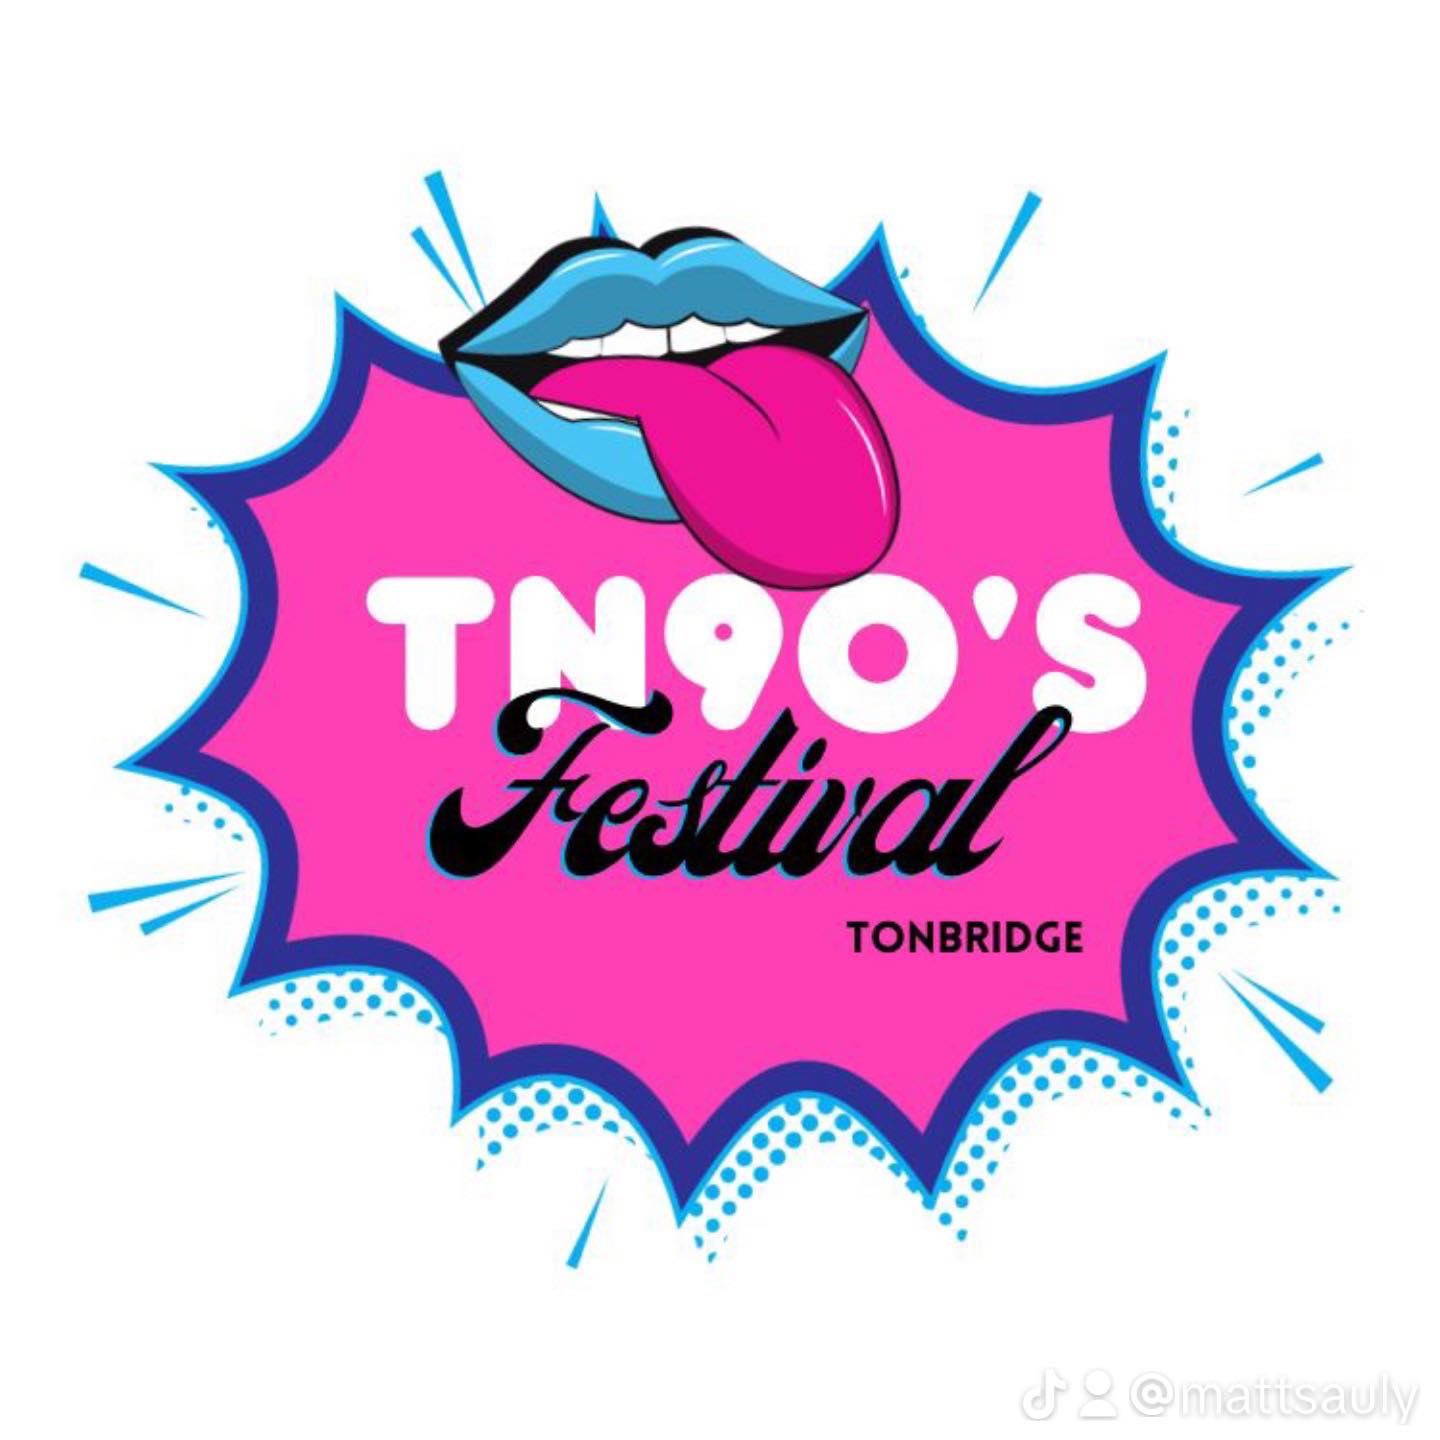 TN90S FESTIVAL logo